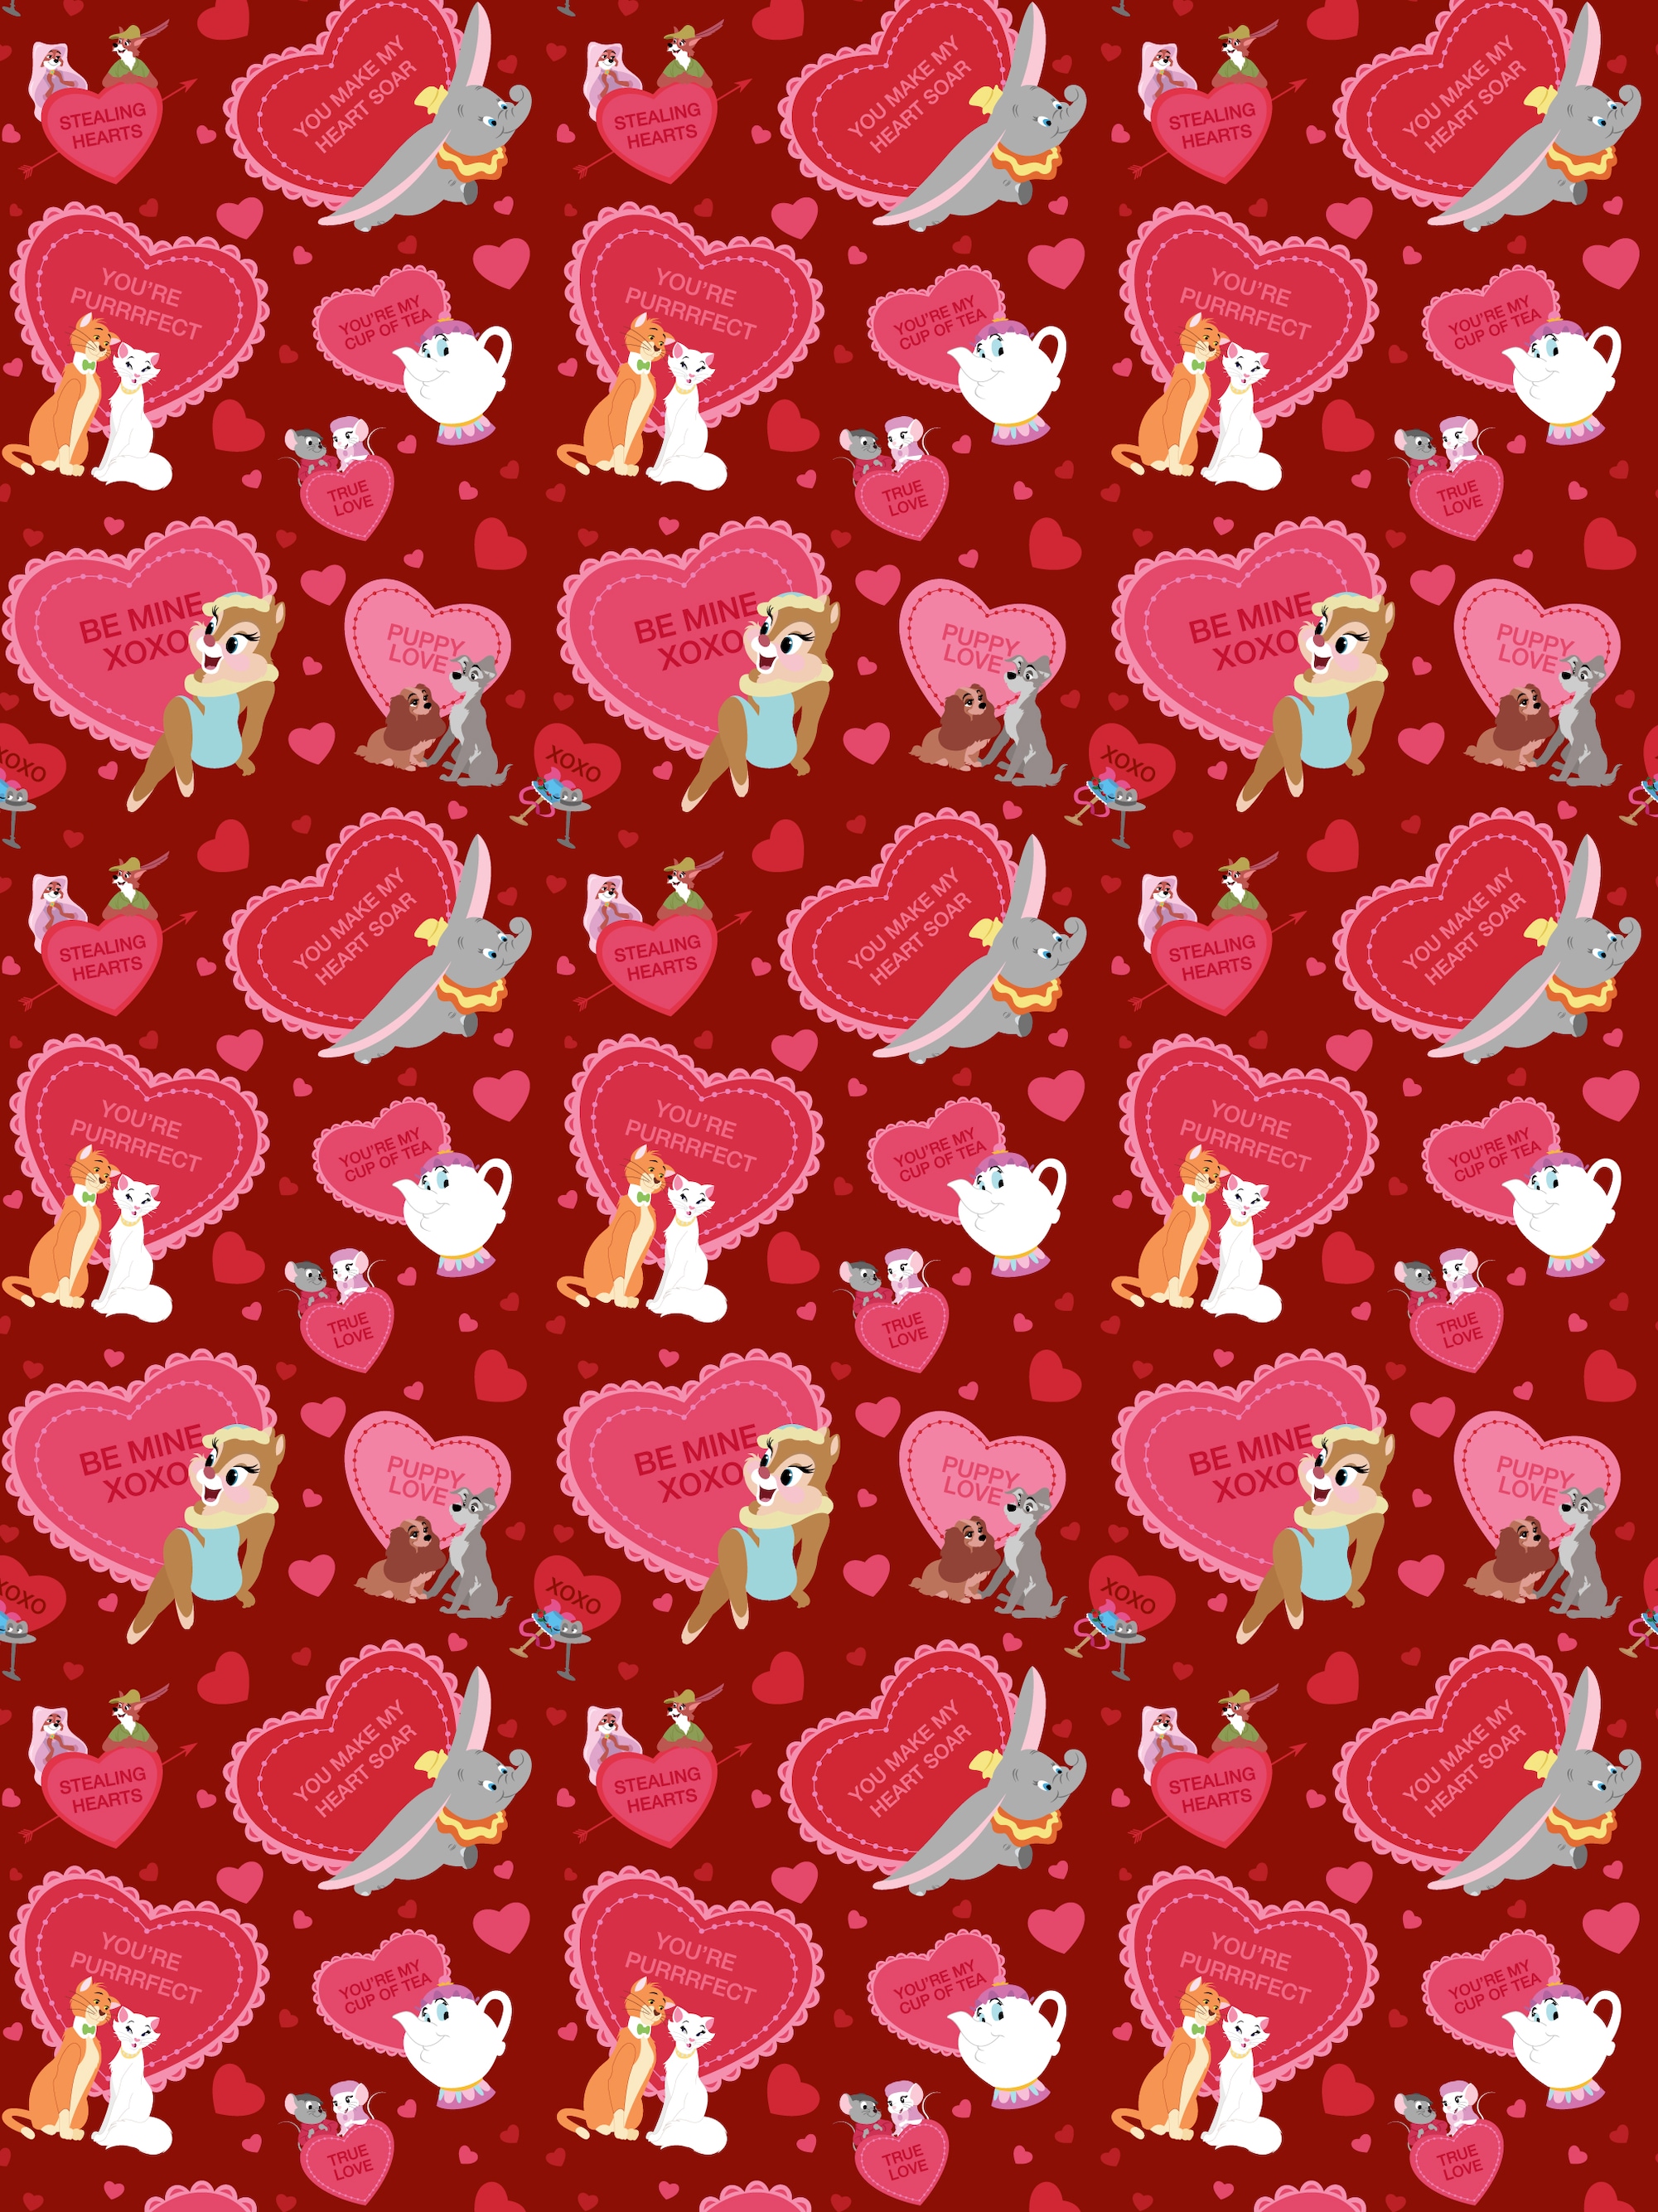 'Disney Hearts' Wallpaper